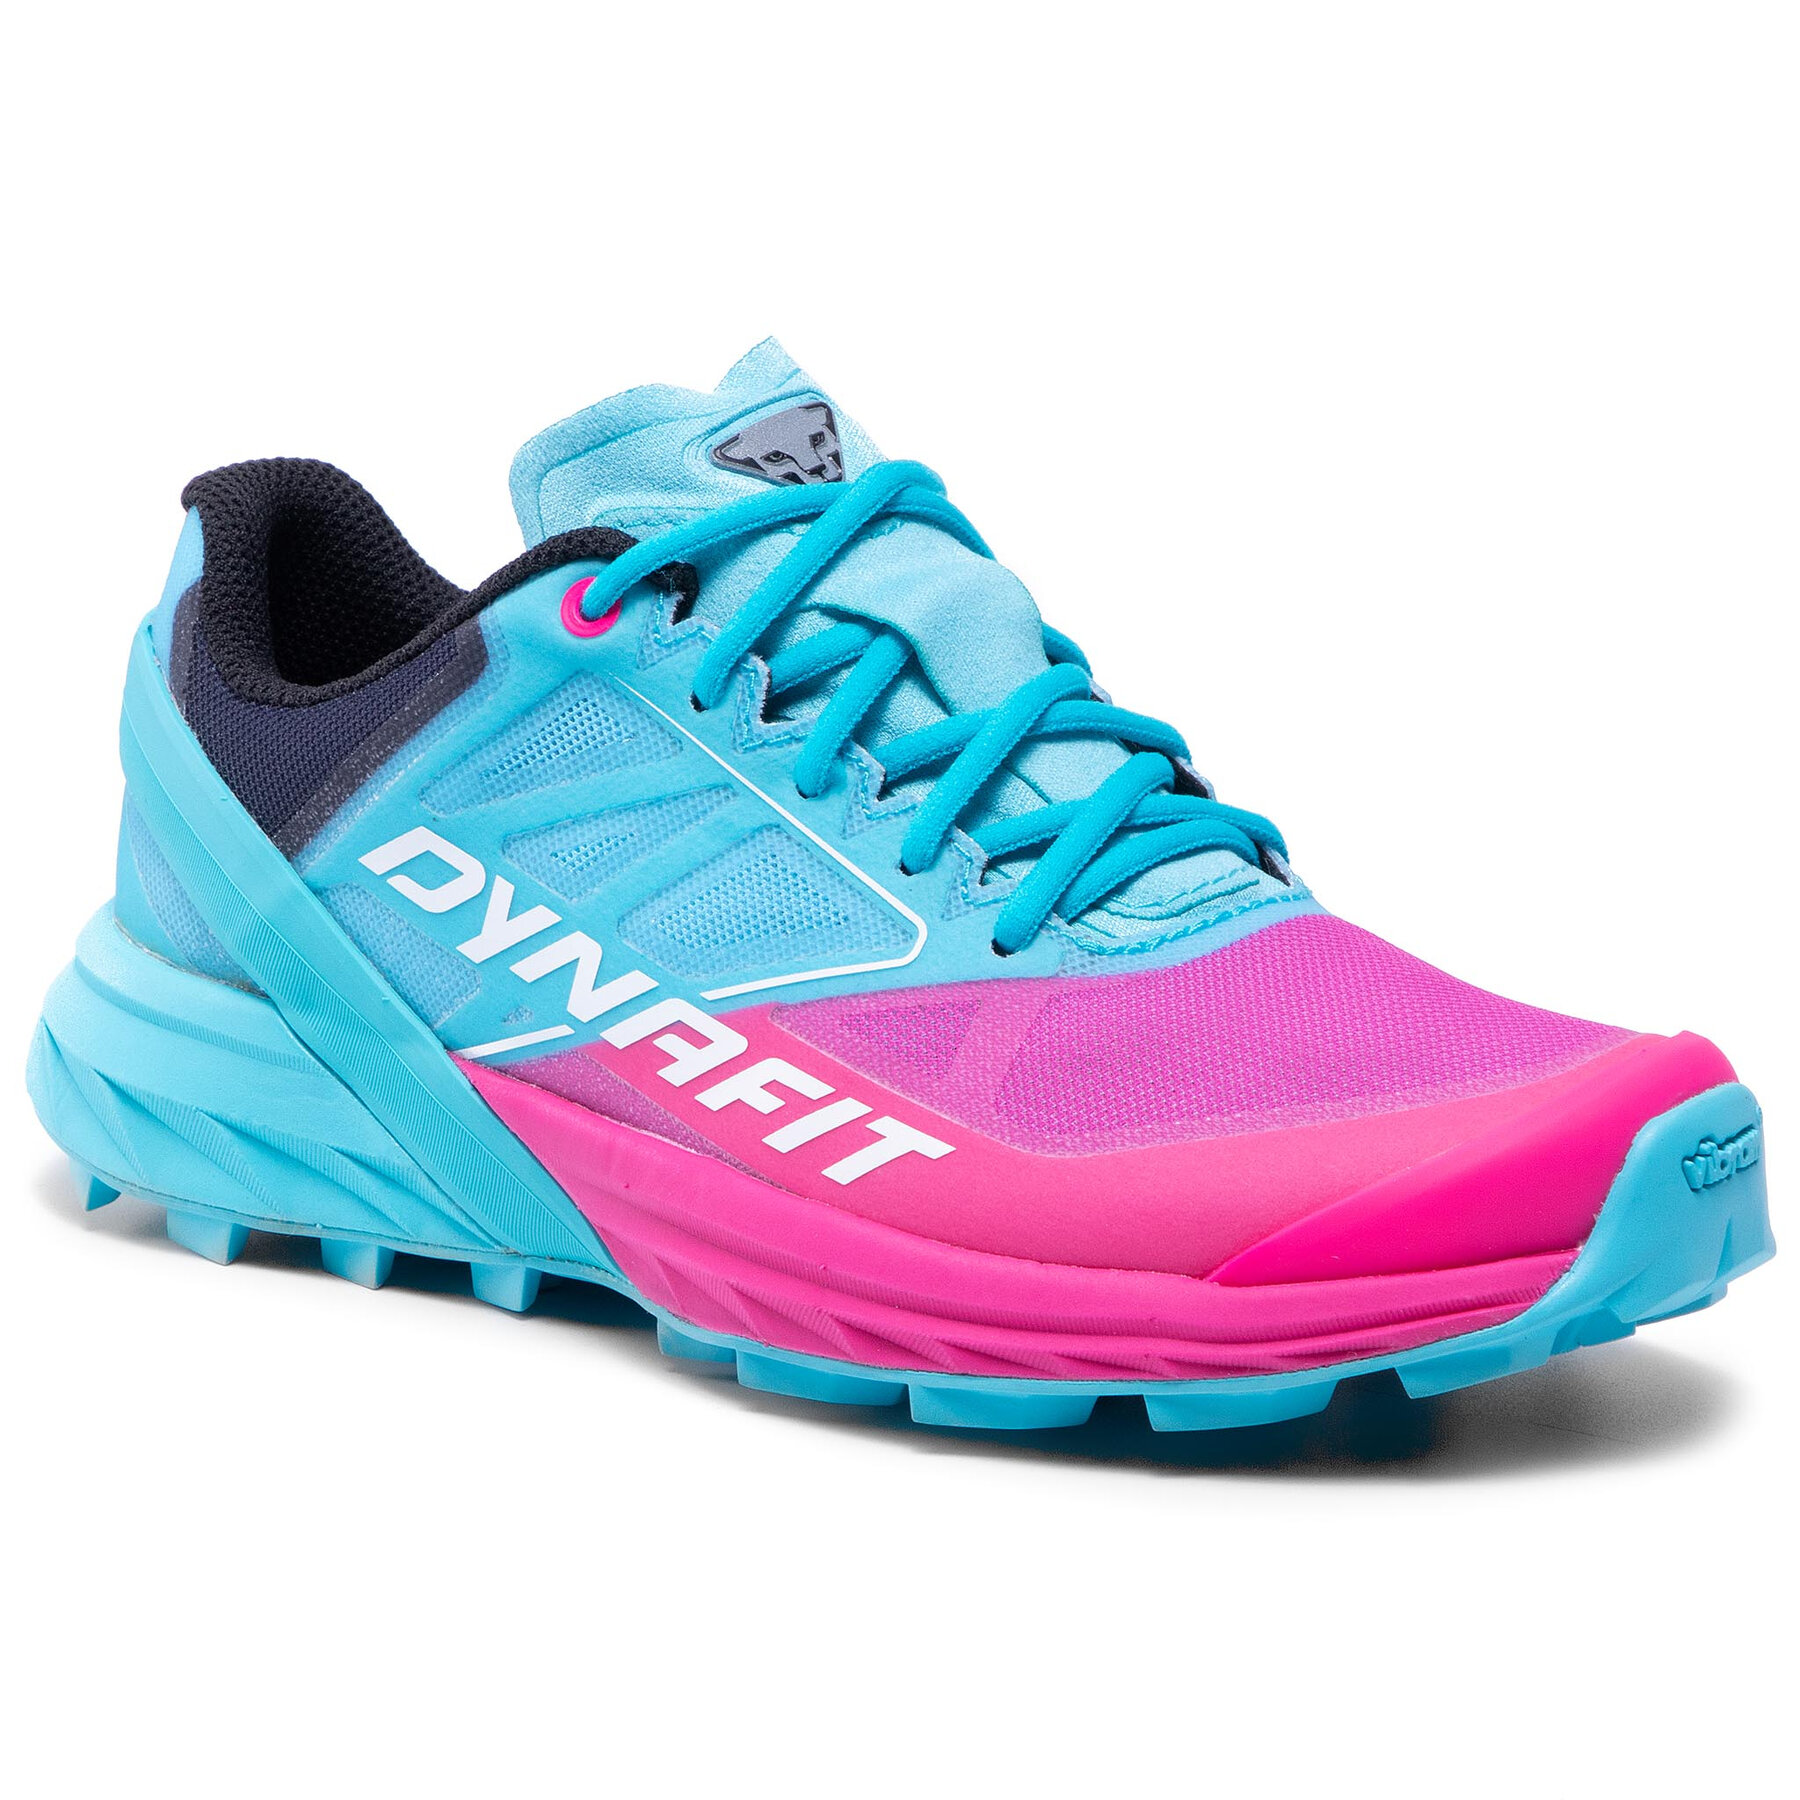 Pantofi Dynafit Alpine W 64065 Turquoise/Pink Glo 3328 3328 imagine super redus 2022